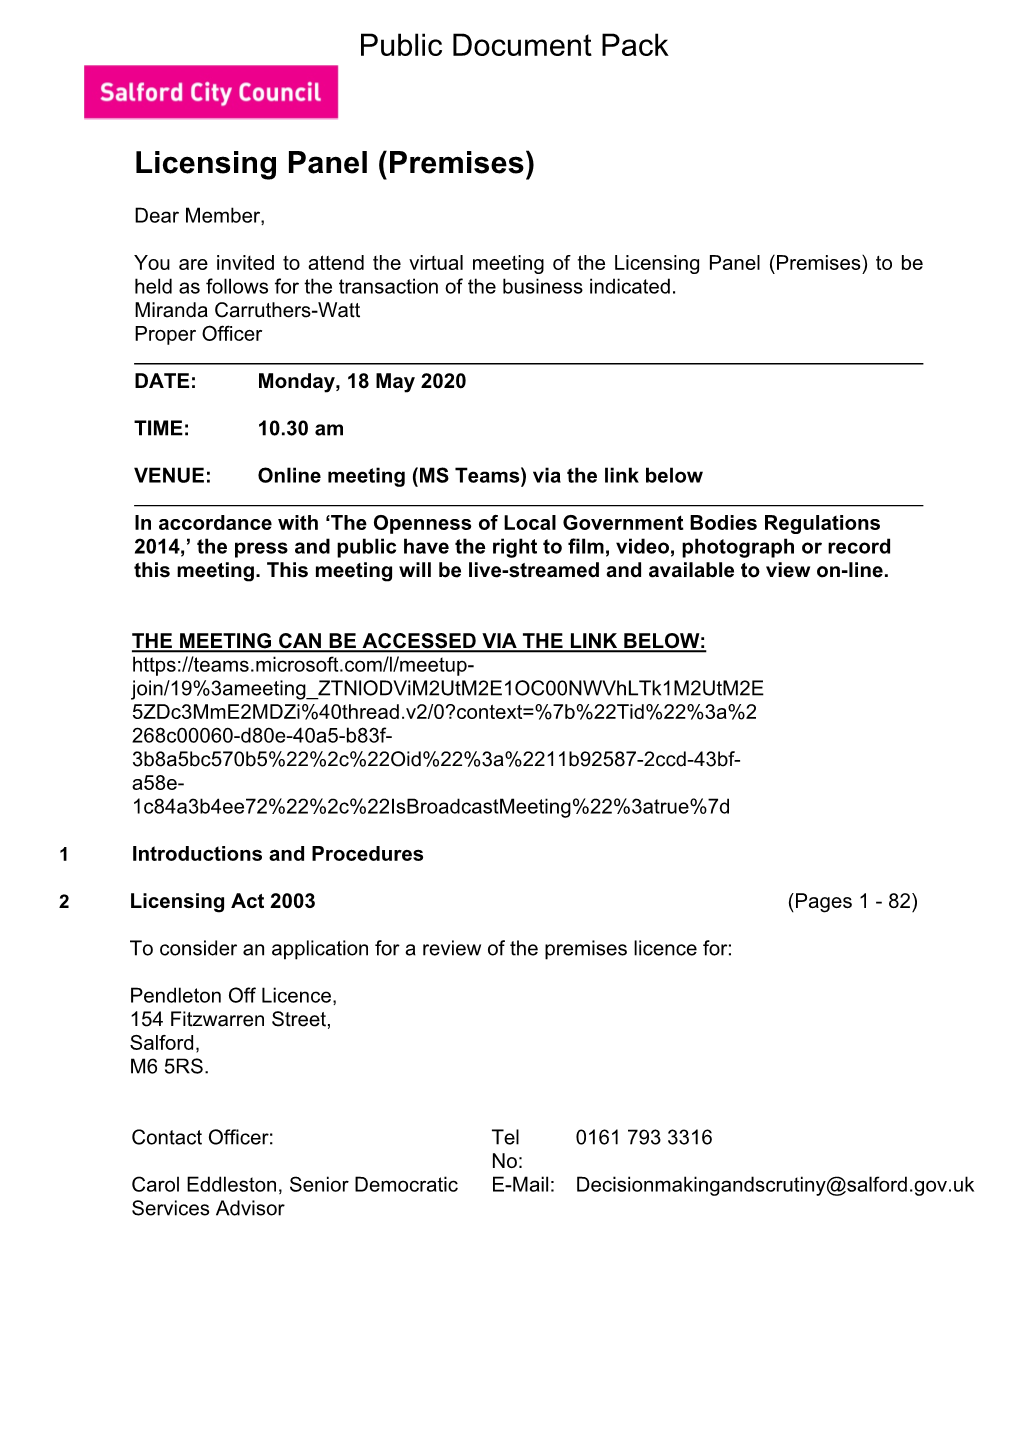 (Public Pack)Agenda Document for Licensing Panel (Premises), 18/05